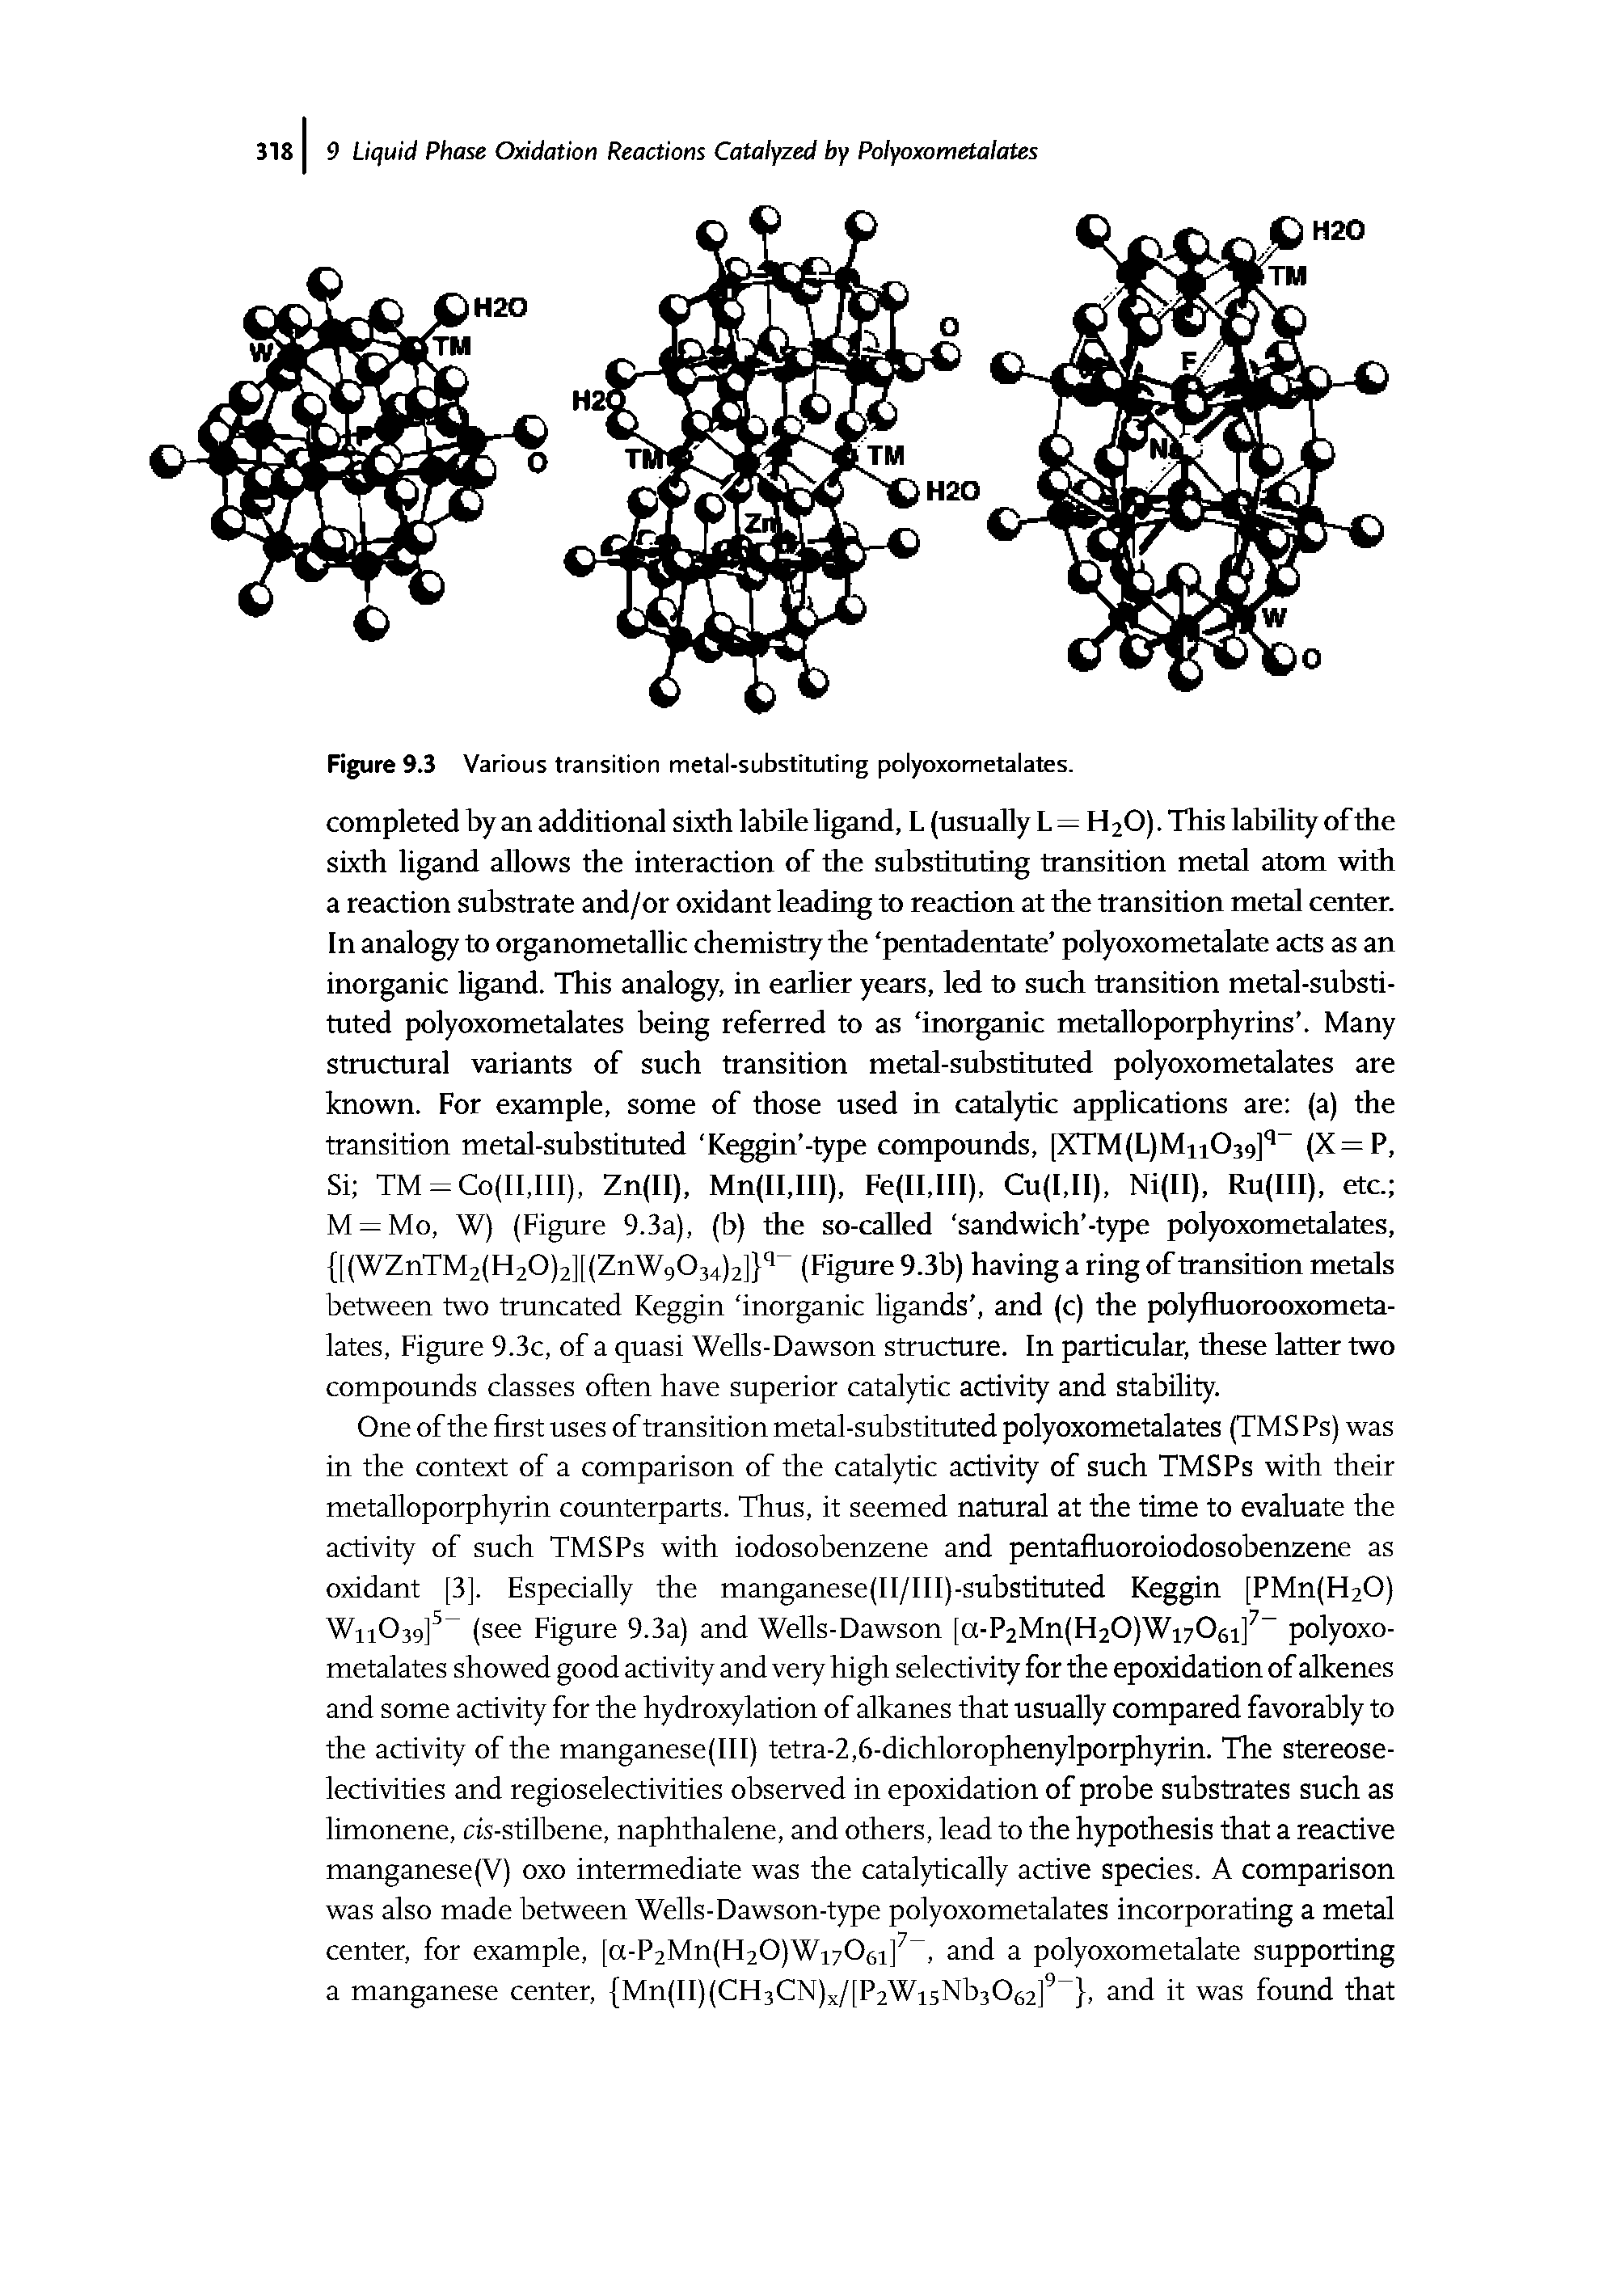 Figure 9.3 Various transition metal-substituting polyoxometalates.